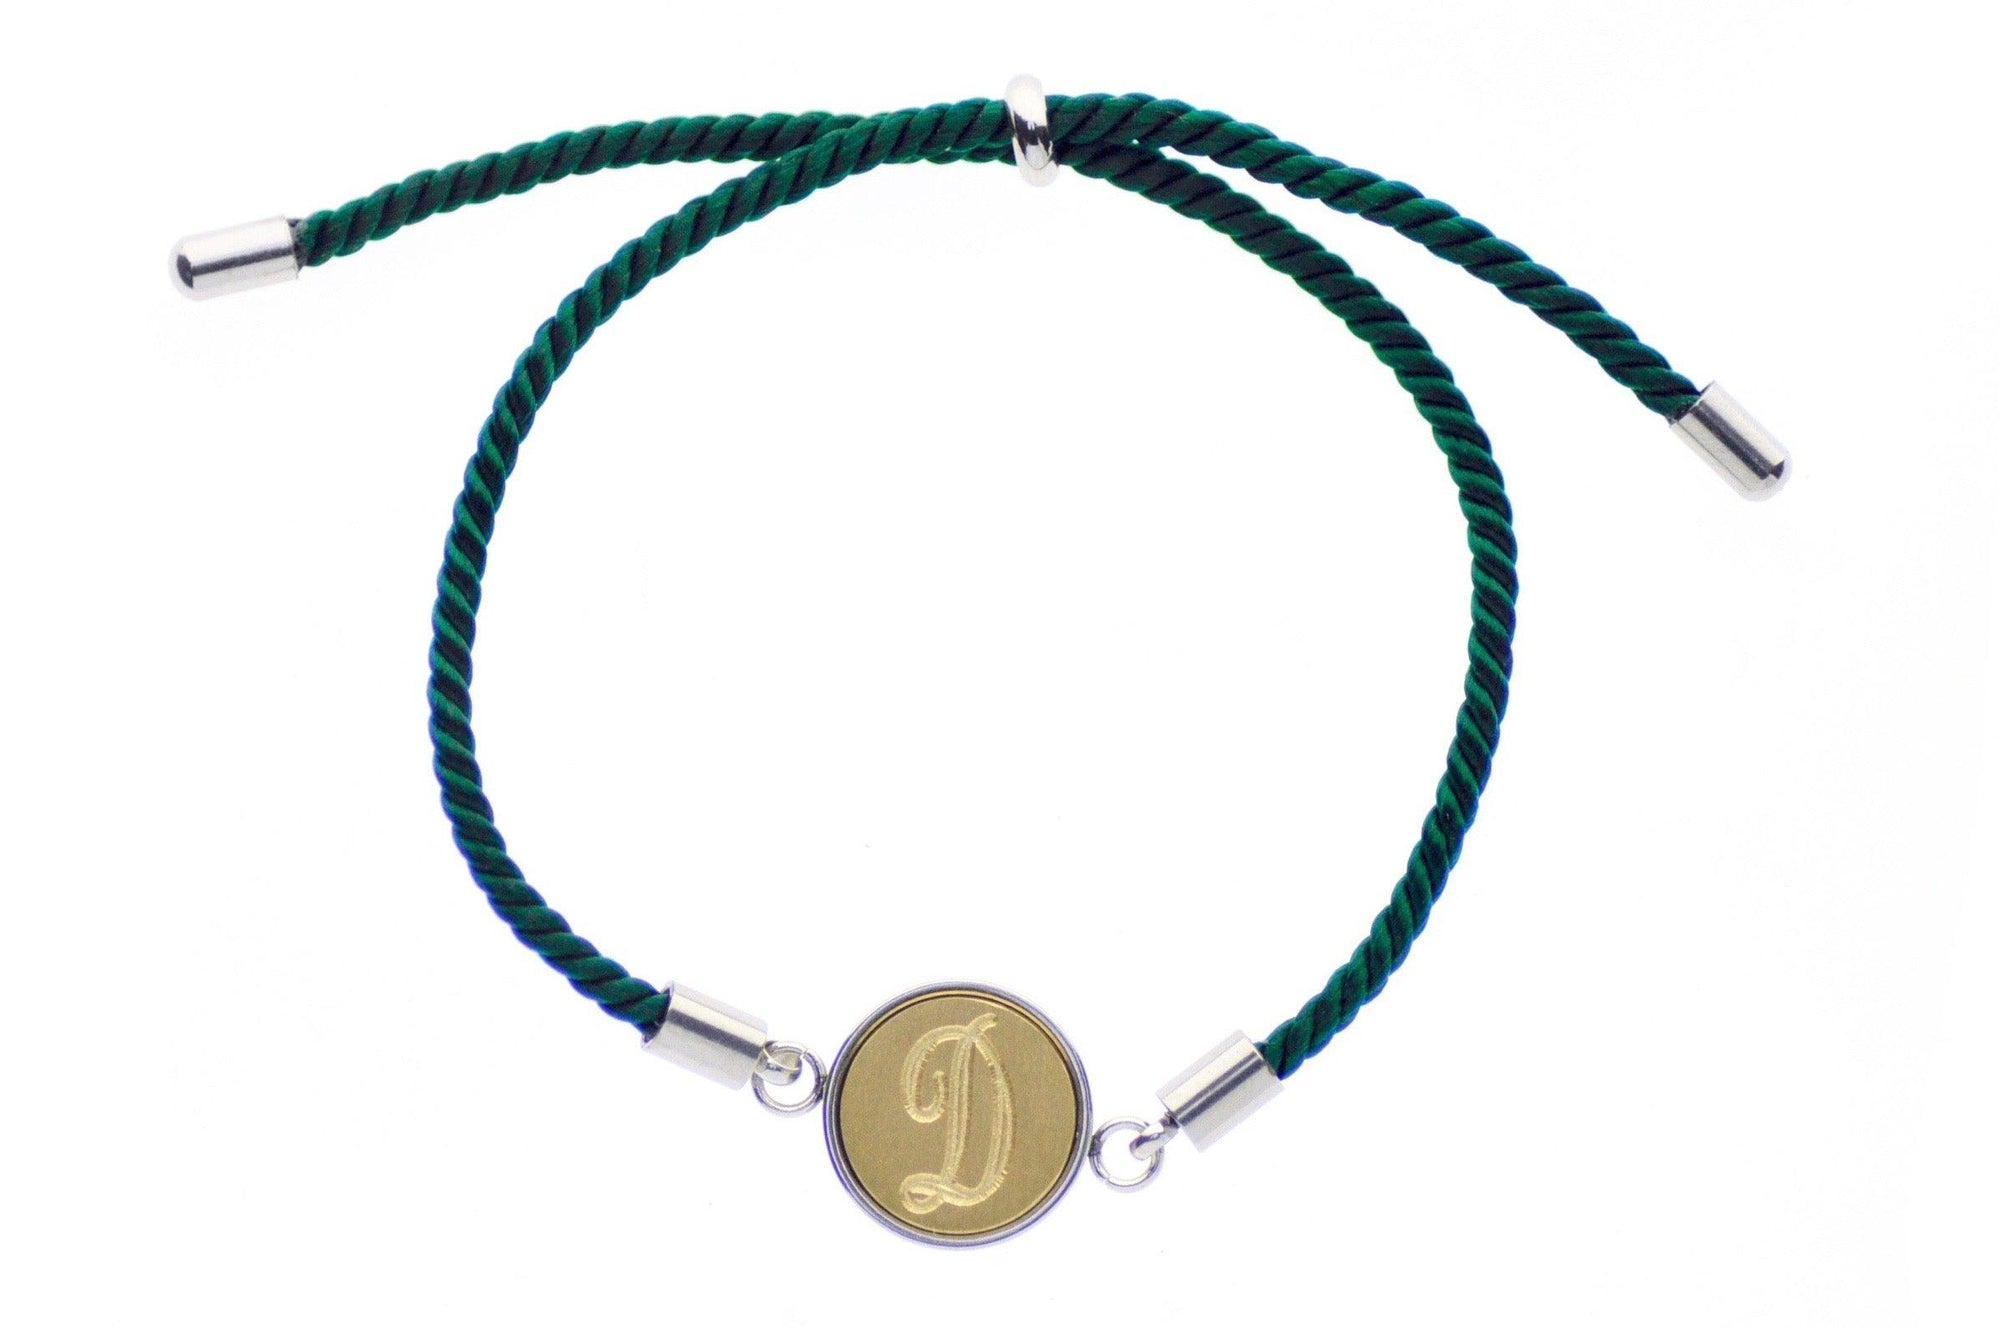 Line Initial Signet Bracelet - Backtozero B20 - 1 initial, 10mm, 12mm, 1initial, adjustable, bracelet, brass, cord, cord bracelet, Custom, green, minimal, One Initial, Personalized, royal blue, signet, signet bracelet, stainless steel, twist cord